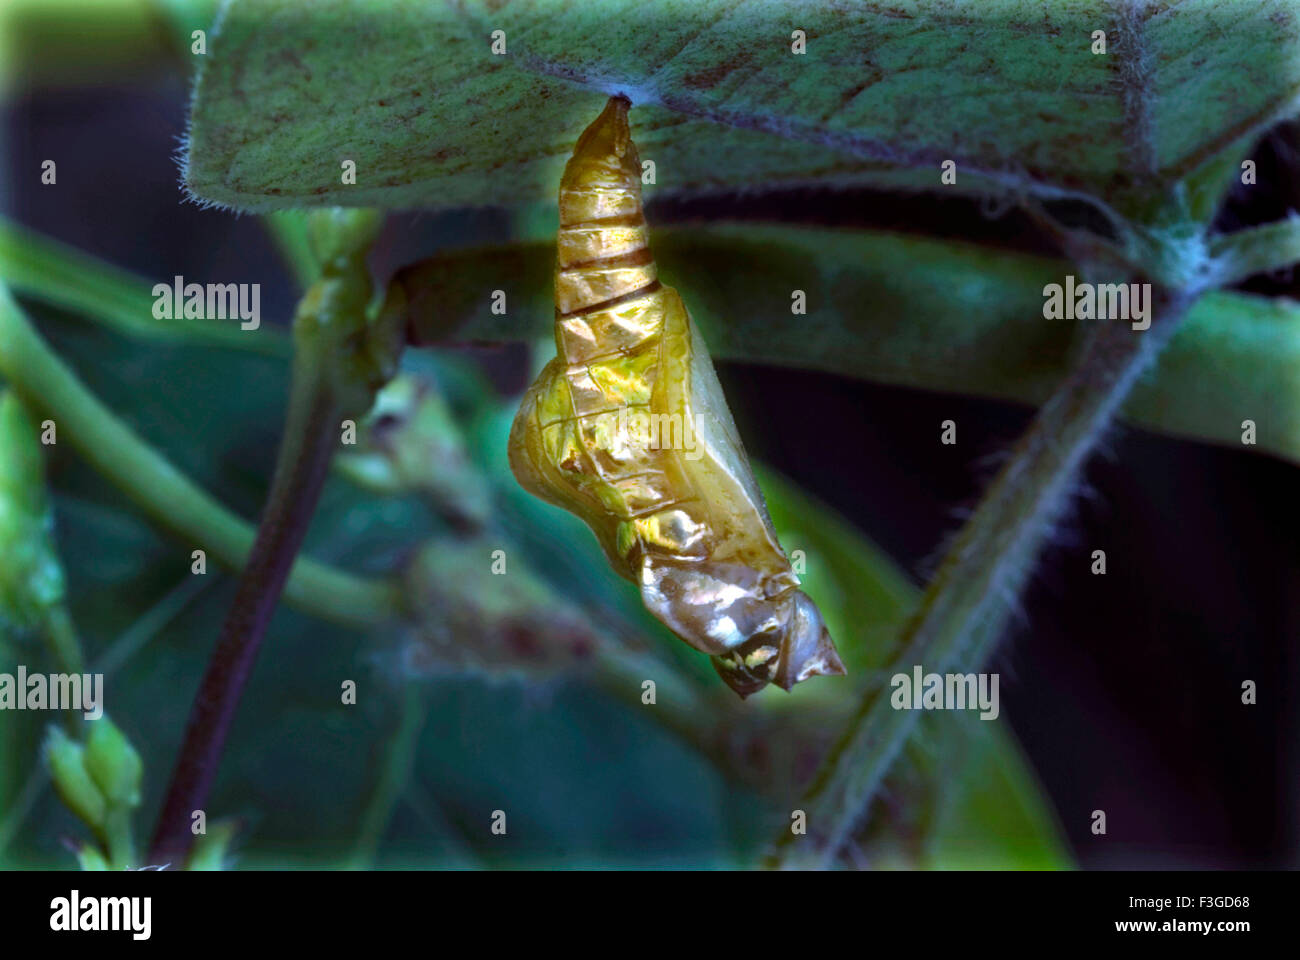 Golden pupa of Lepidoptera survival technique Stock Photo